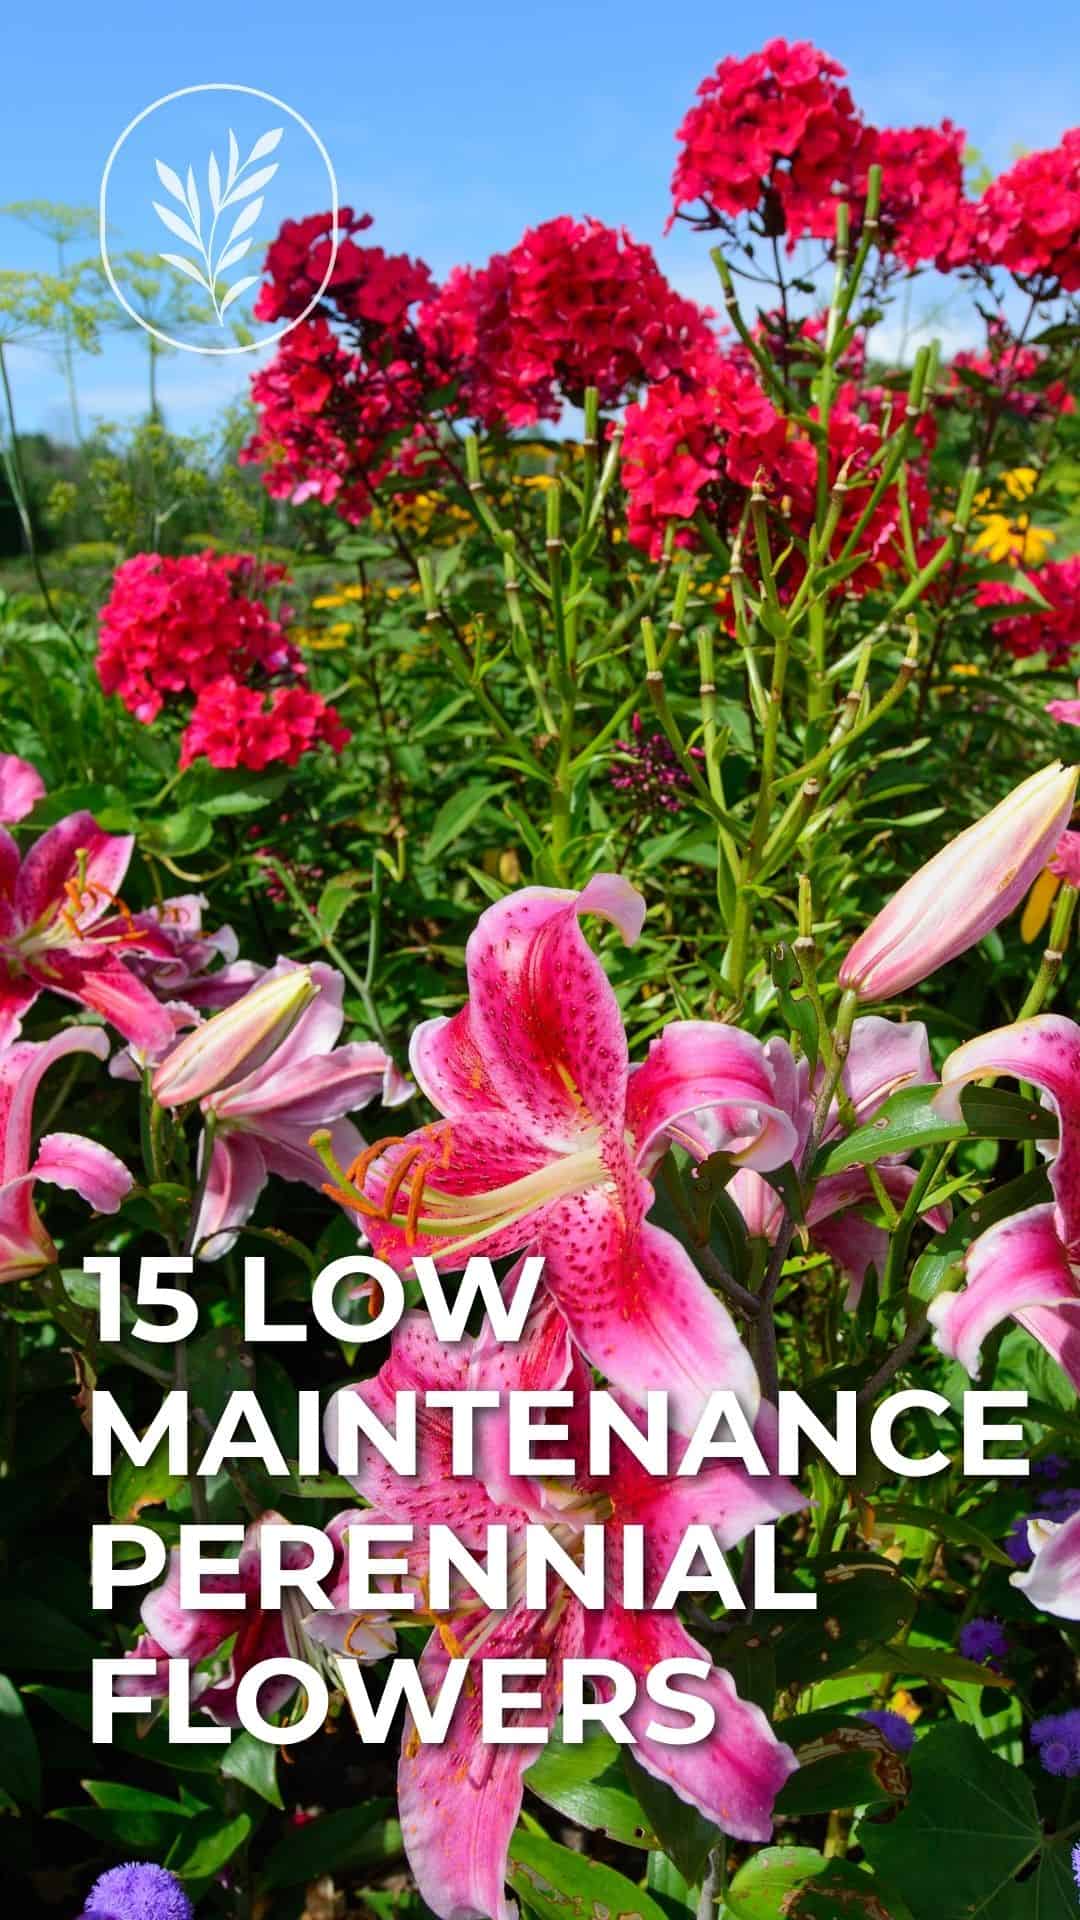 15 low maintenance perennial flowers - story via @home4theharvest